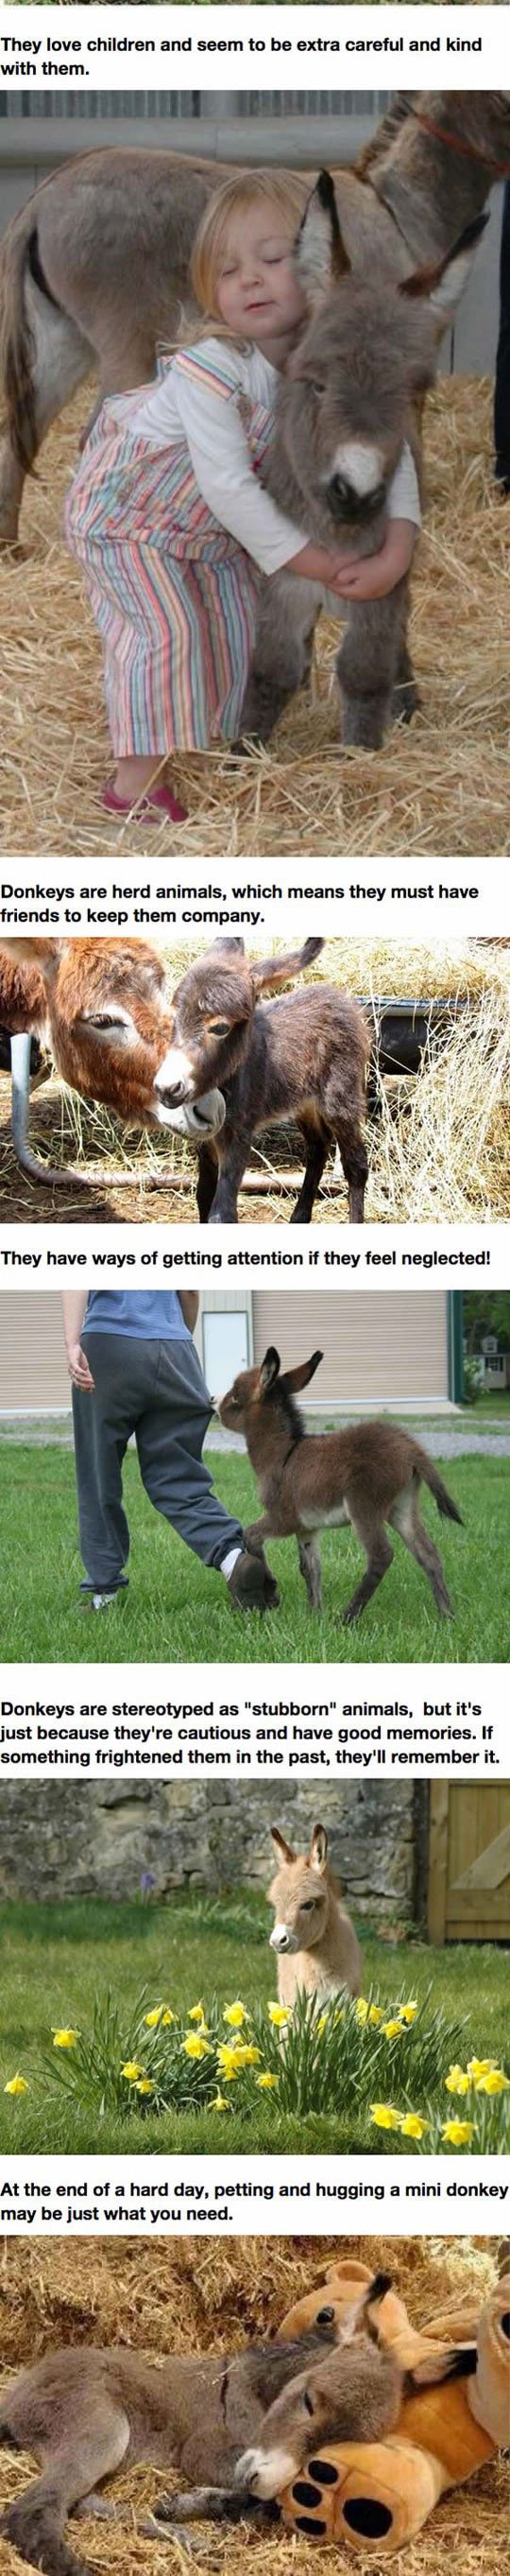 funny-mini-donkeys-dream-pet-kids-farm